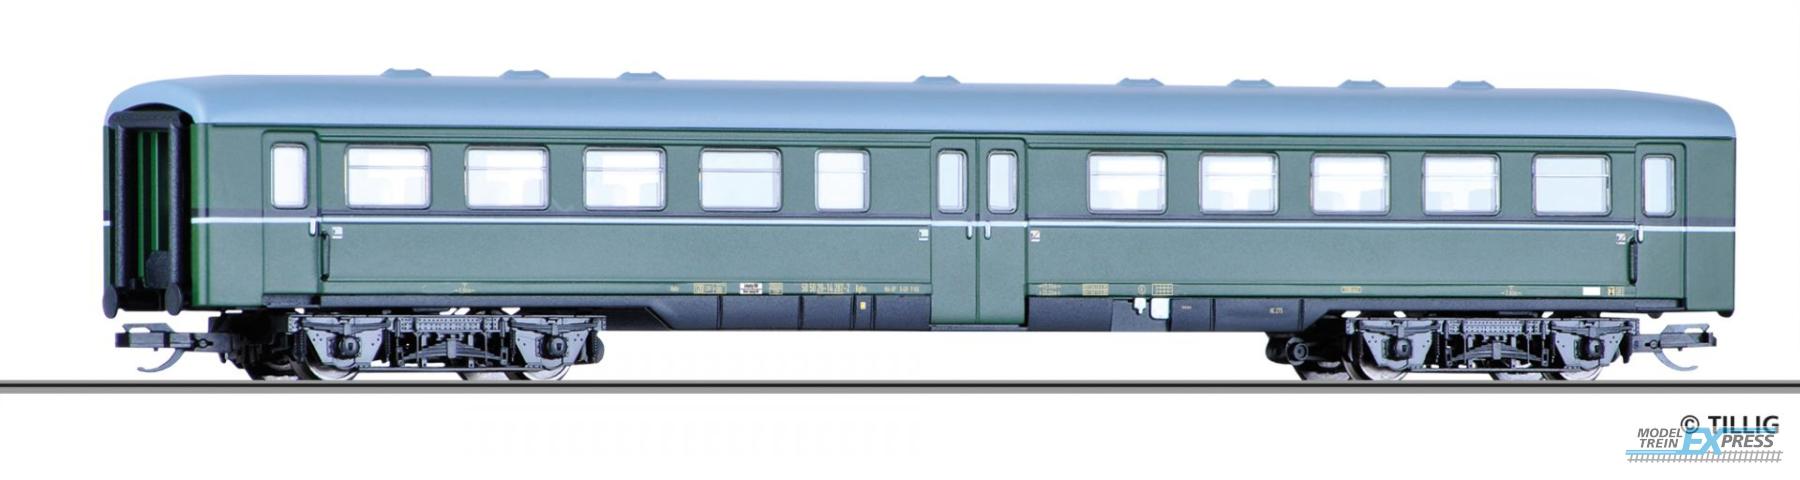 Tillig 13878 Reisezugwagen 2. Klasse Bghu der DR, 2. Betriebsnummer, Ep. IV